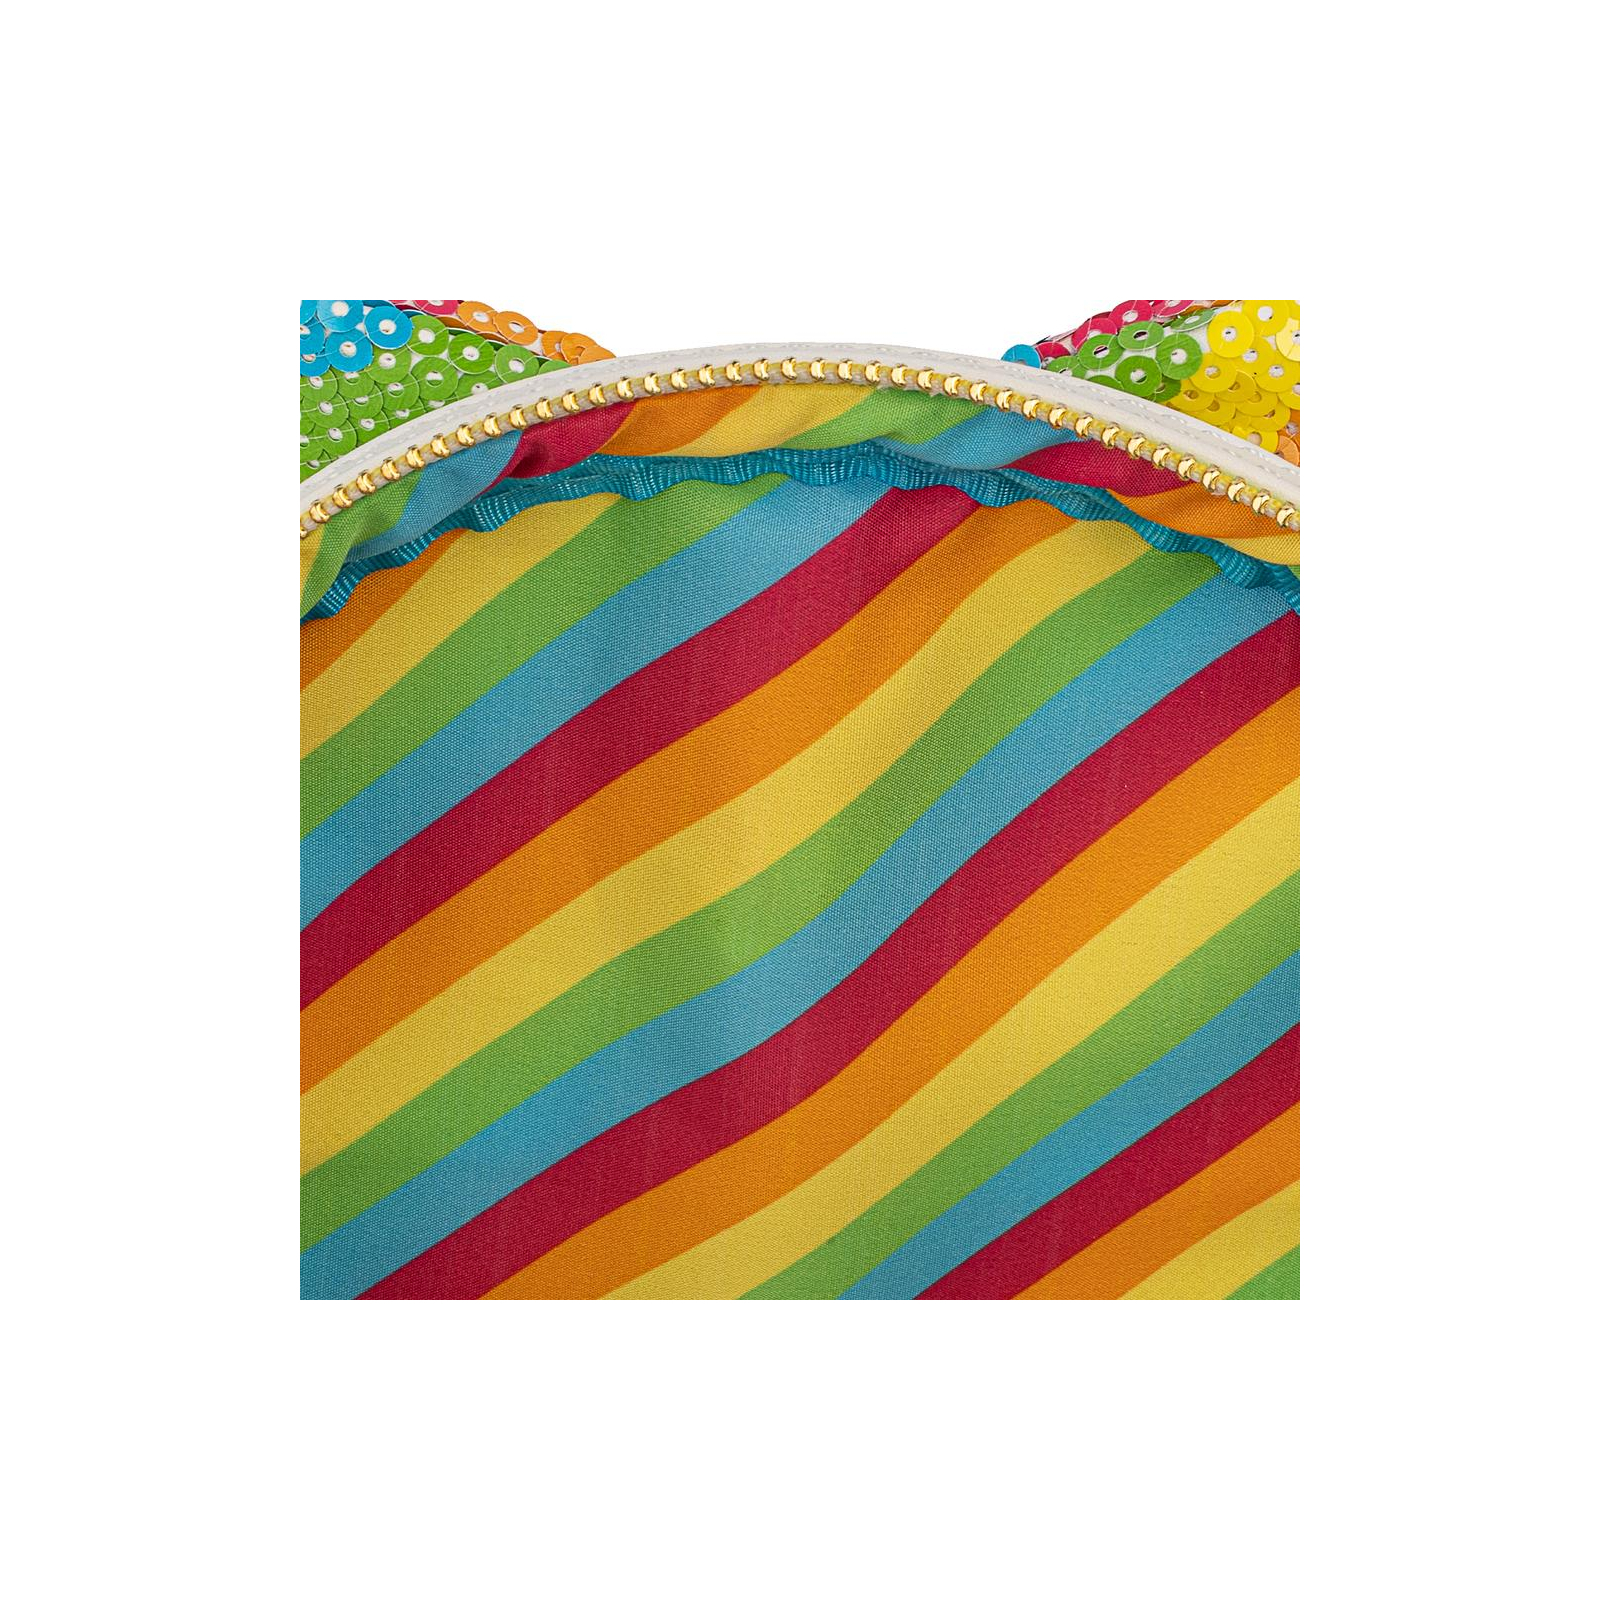 Рюкзак школьный Loungefly Disney - Minnie Mouse Sequined Rainbow Mini Backpack (WDBK1659) изображение 5